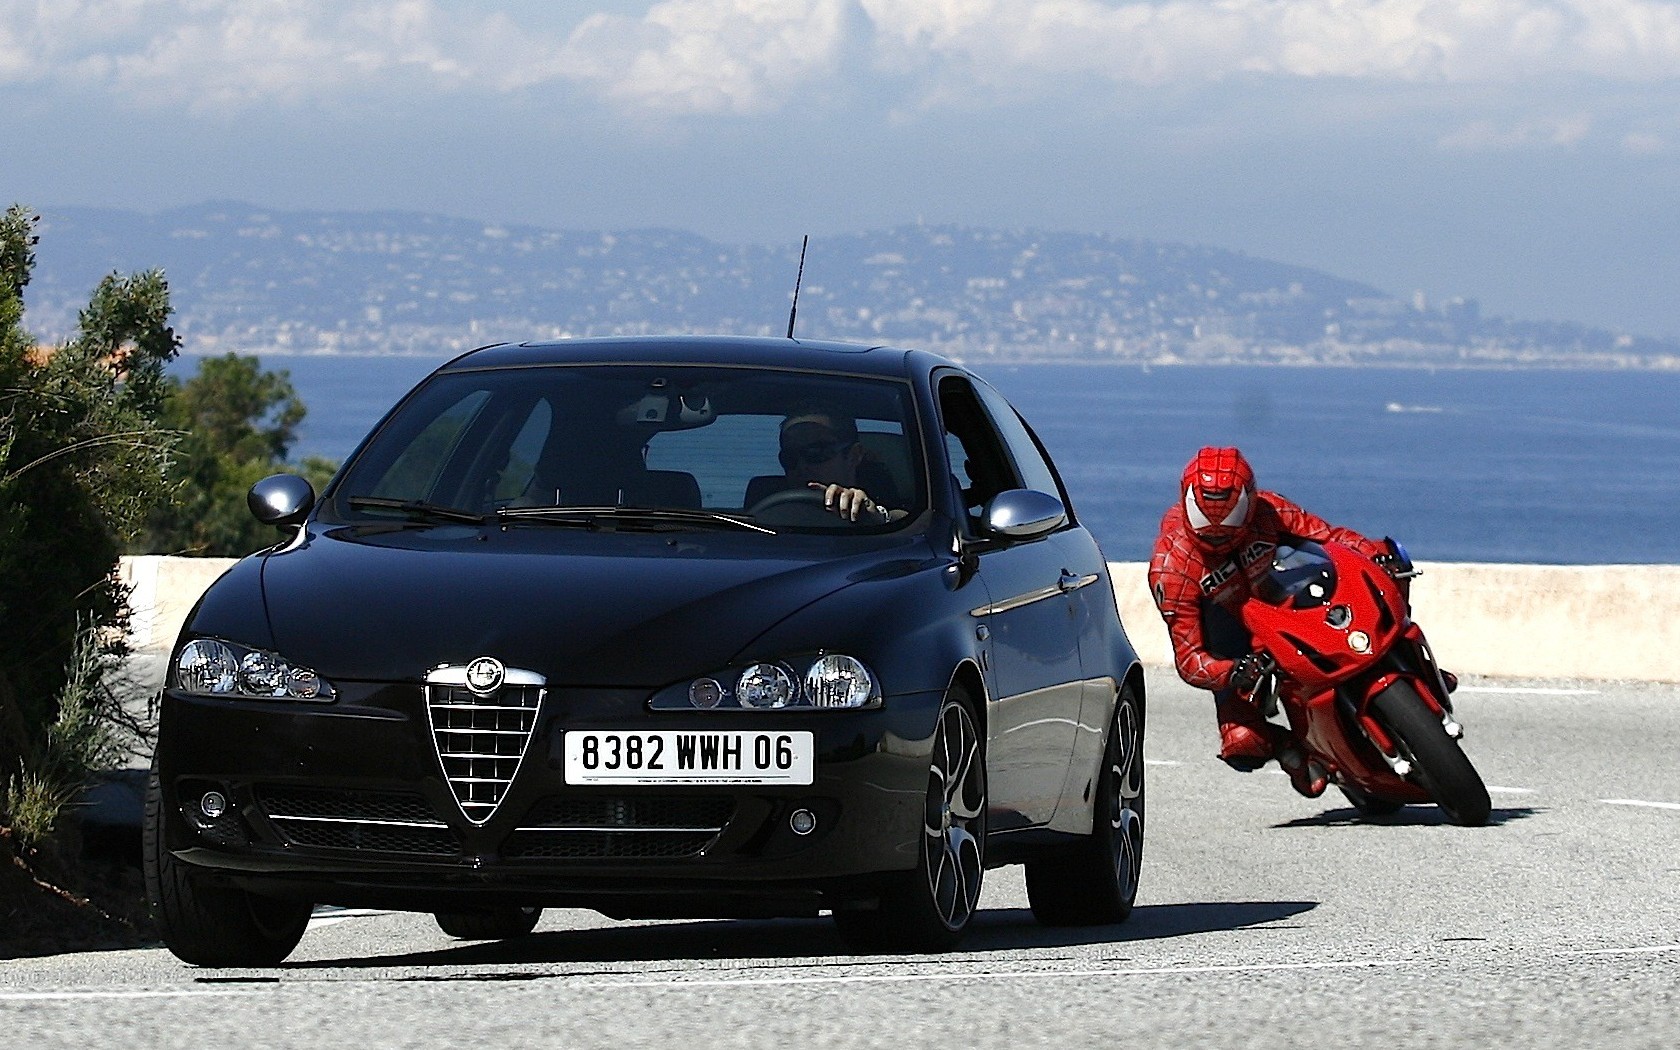 Download full size Alfa Romeo wallpaper / Cars / 1680x1050